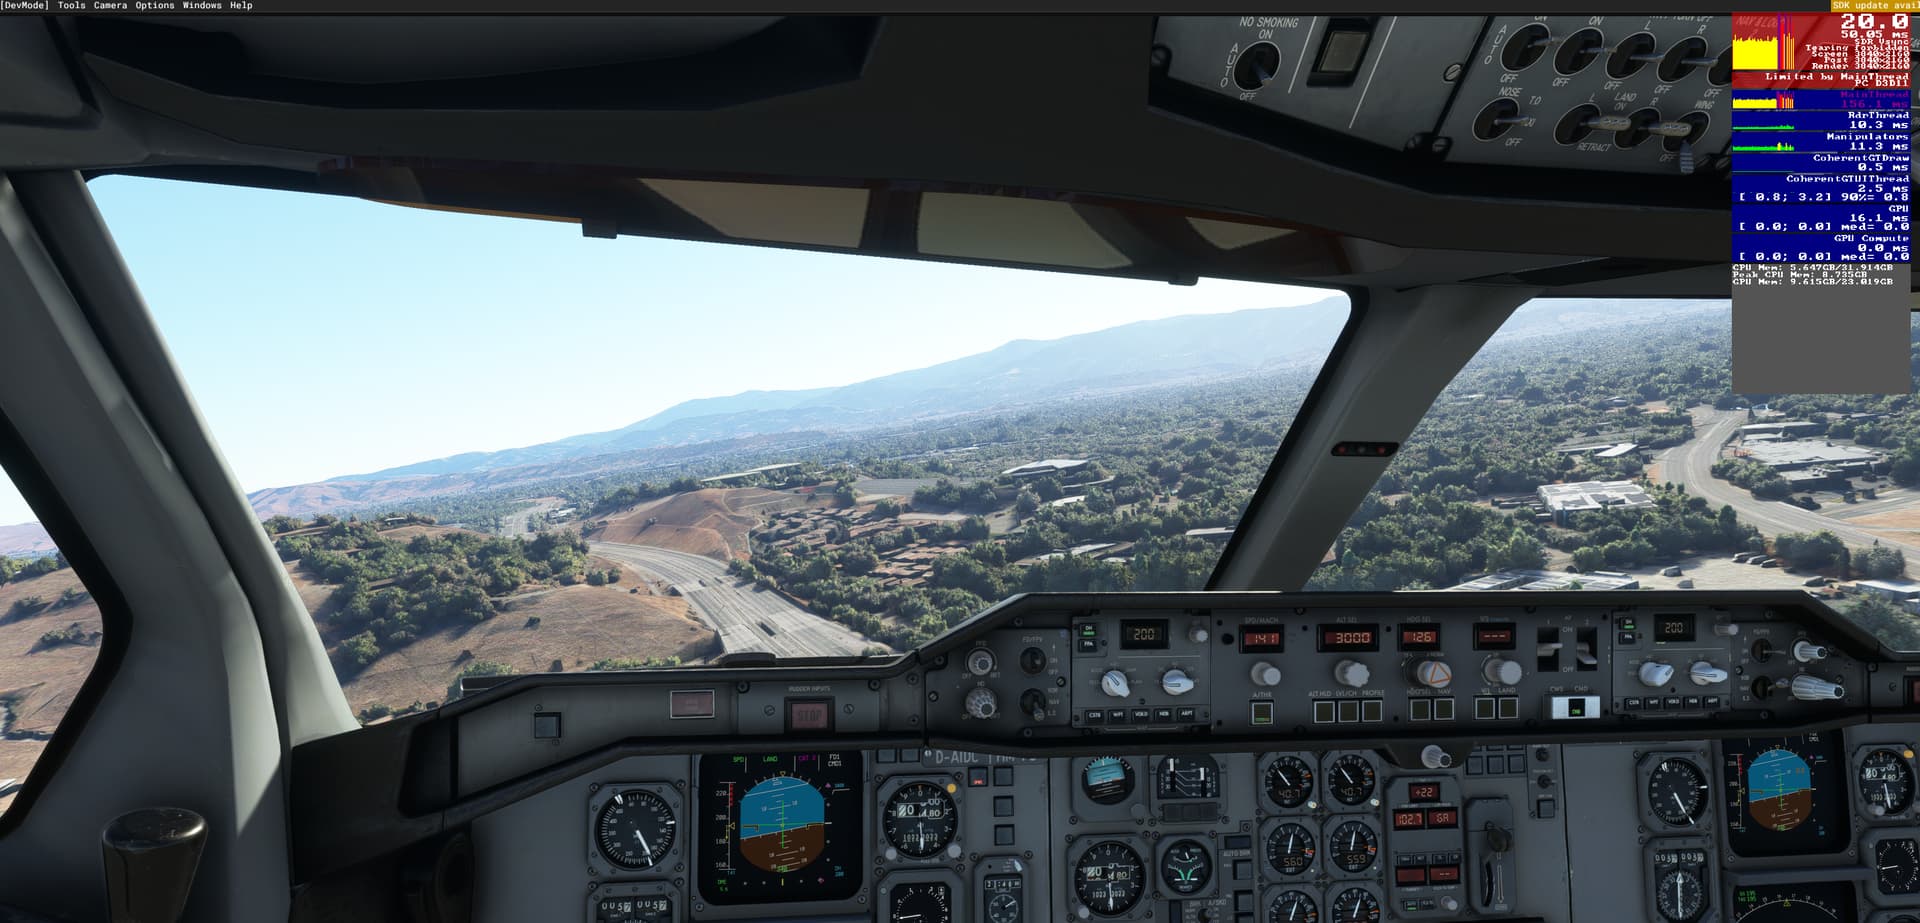 LoupeDeck Live Setup - Hardware & Peripherals - Microsoft Flight Simulator  Forums